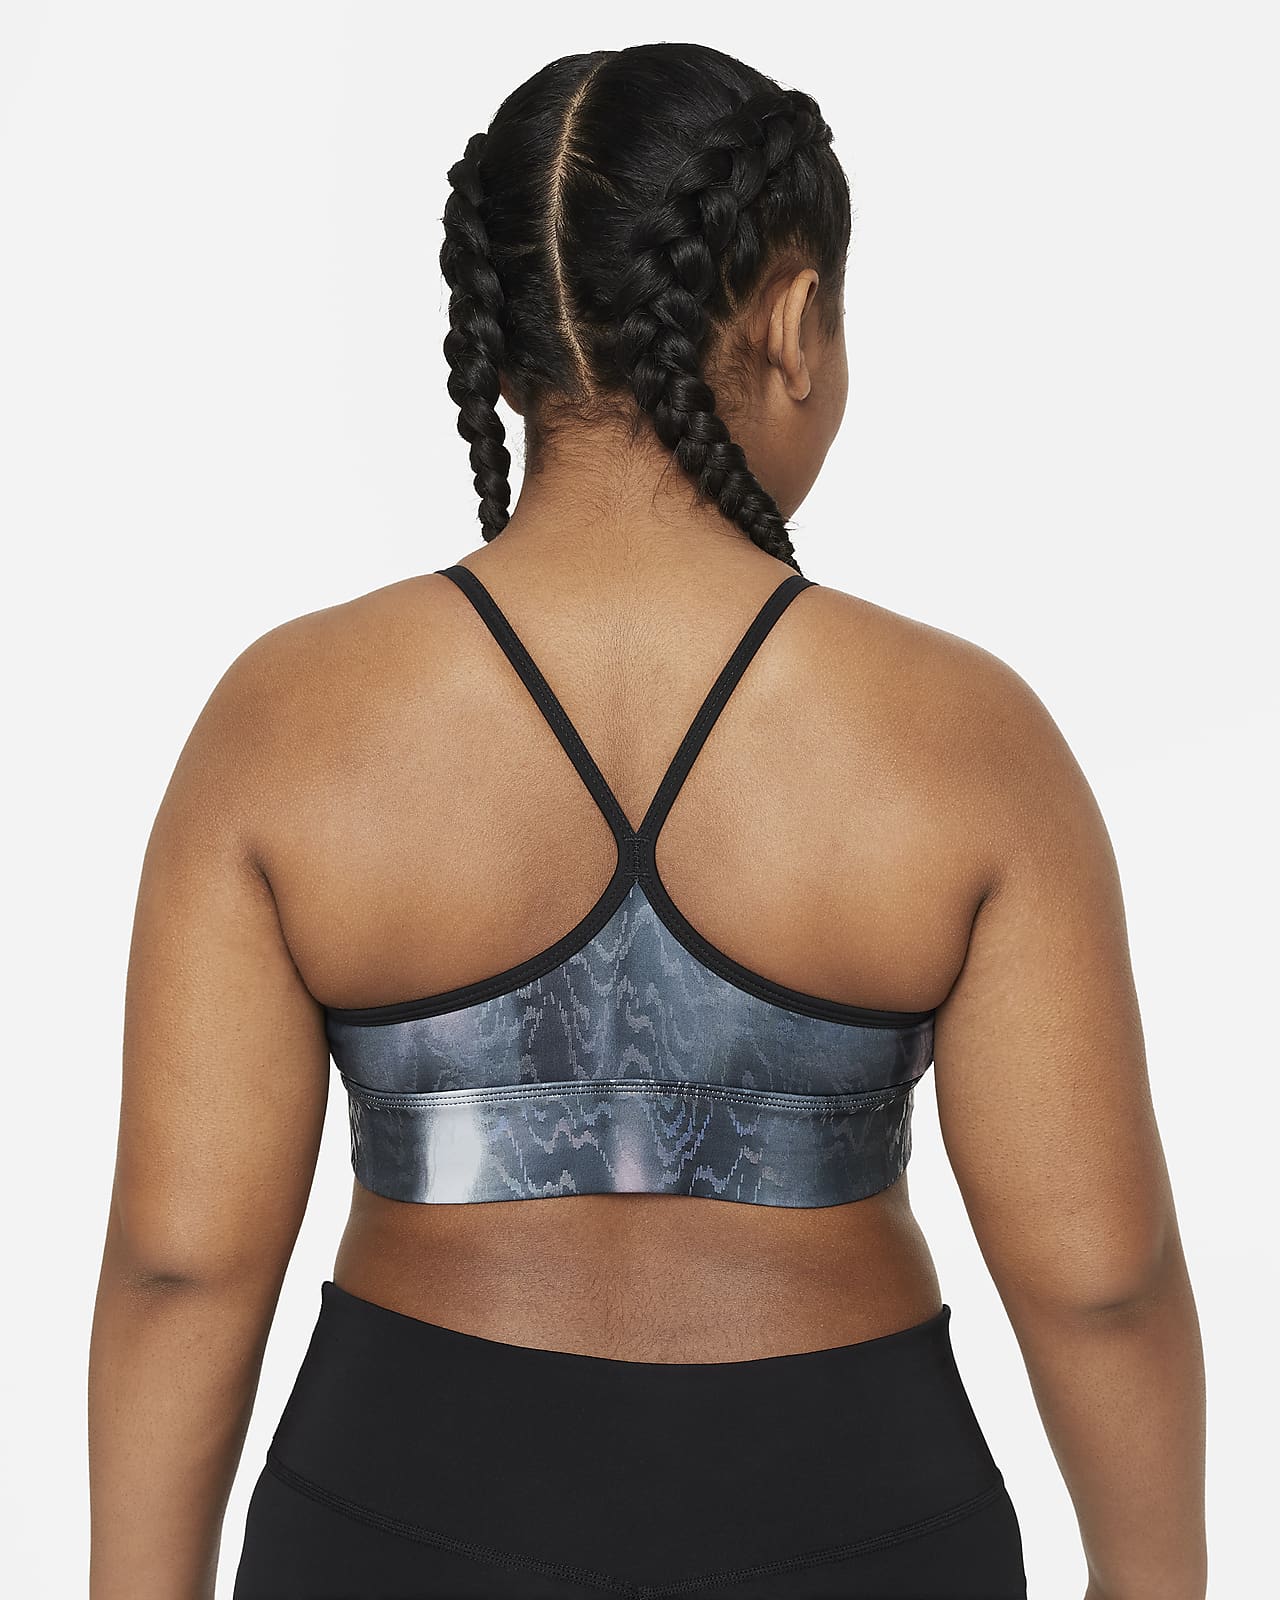 Nike sports bra L Size L - $19 - From Brittany